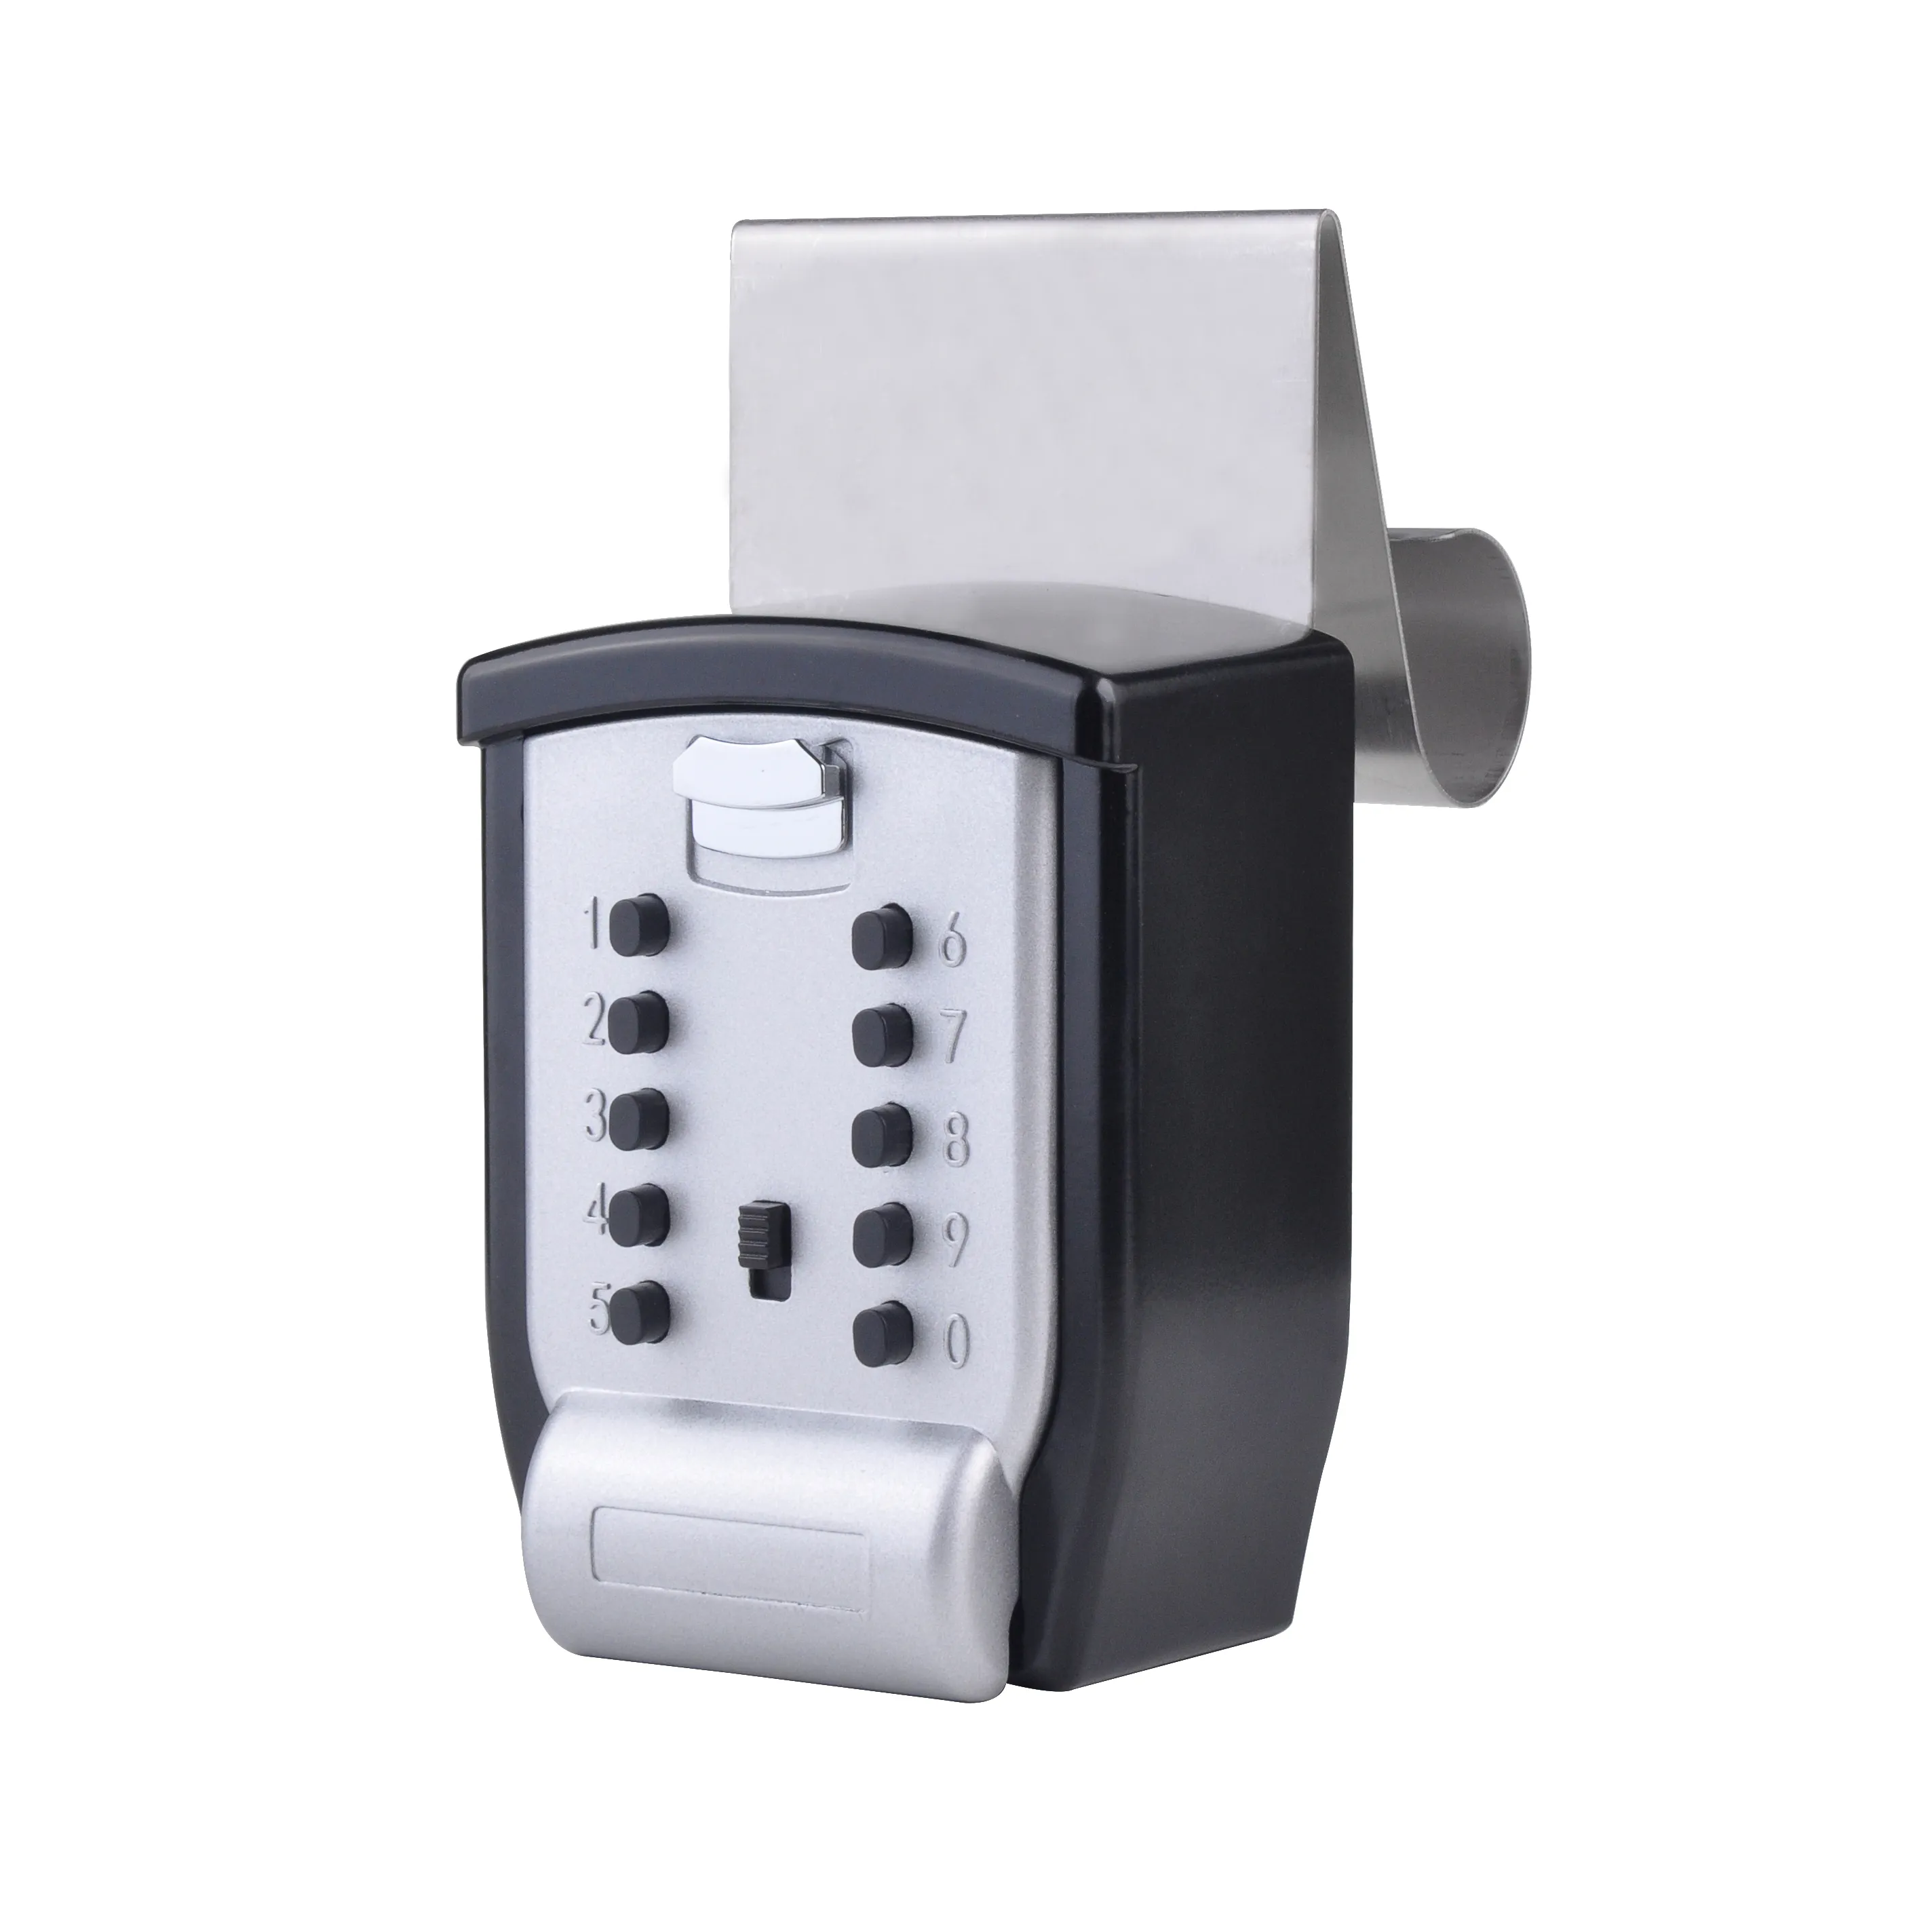 11 button combination lock keys cabinet security storage Key Holder Box car key lock box for car window punch button